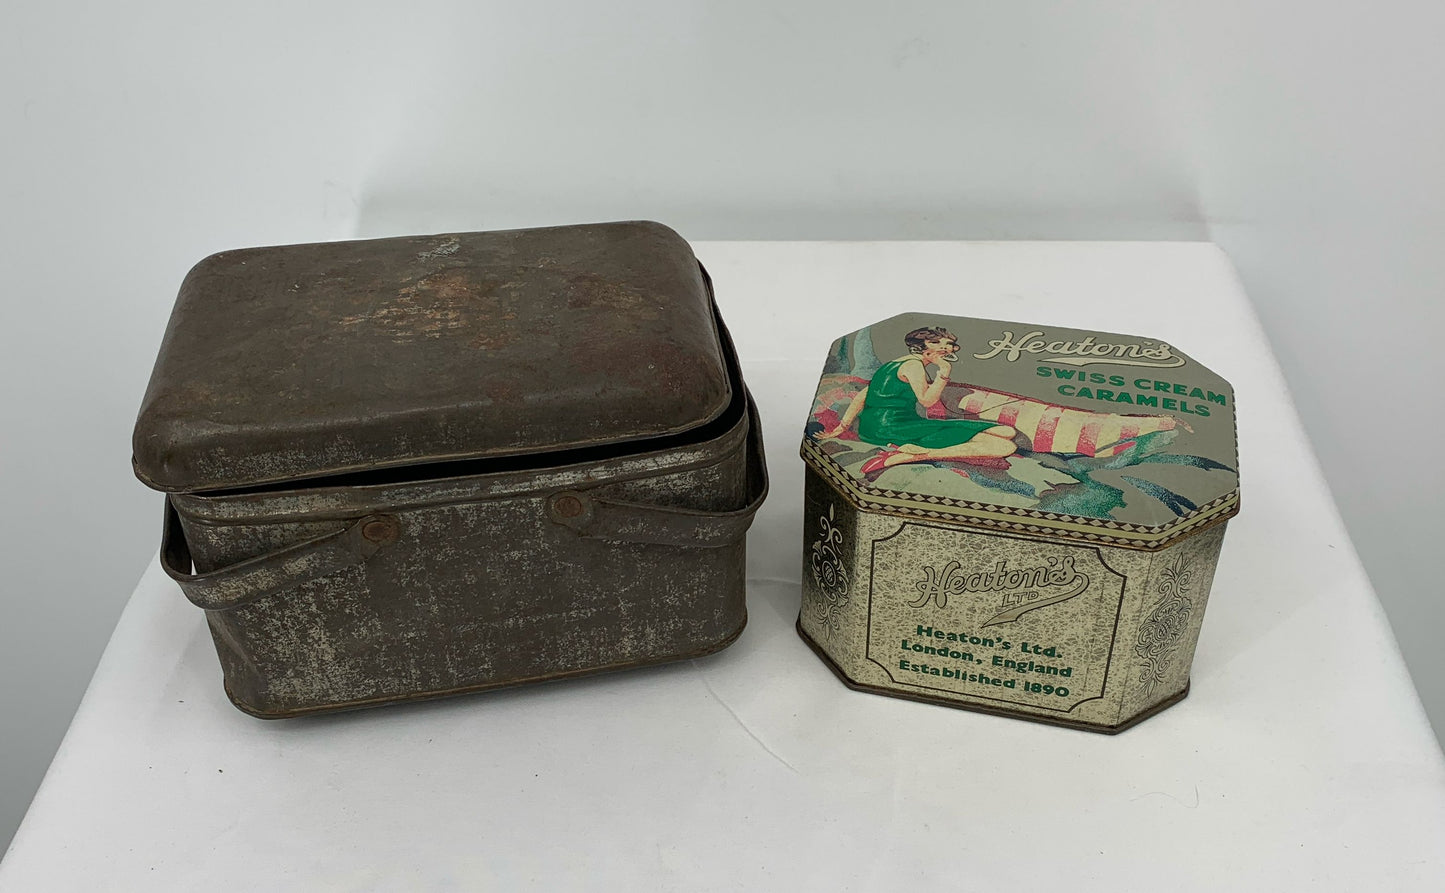 Vintage Tins Union Leader Cut Plug Tobacco & Heaton's Swiss Cream Caramels Tin